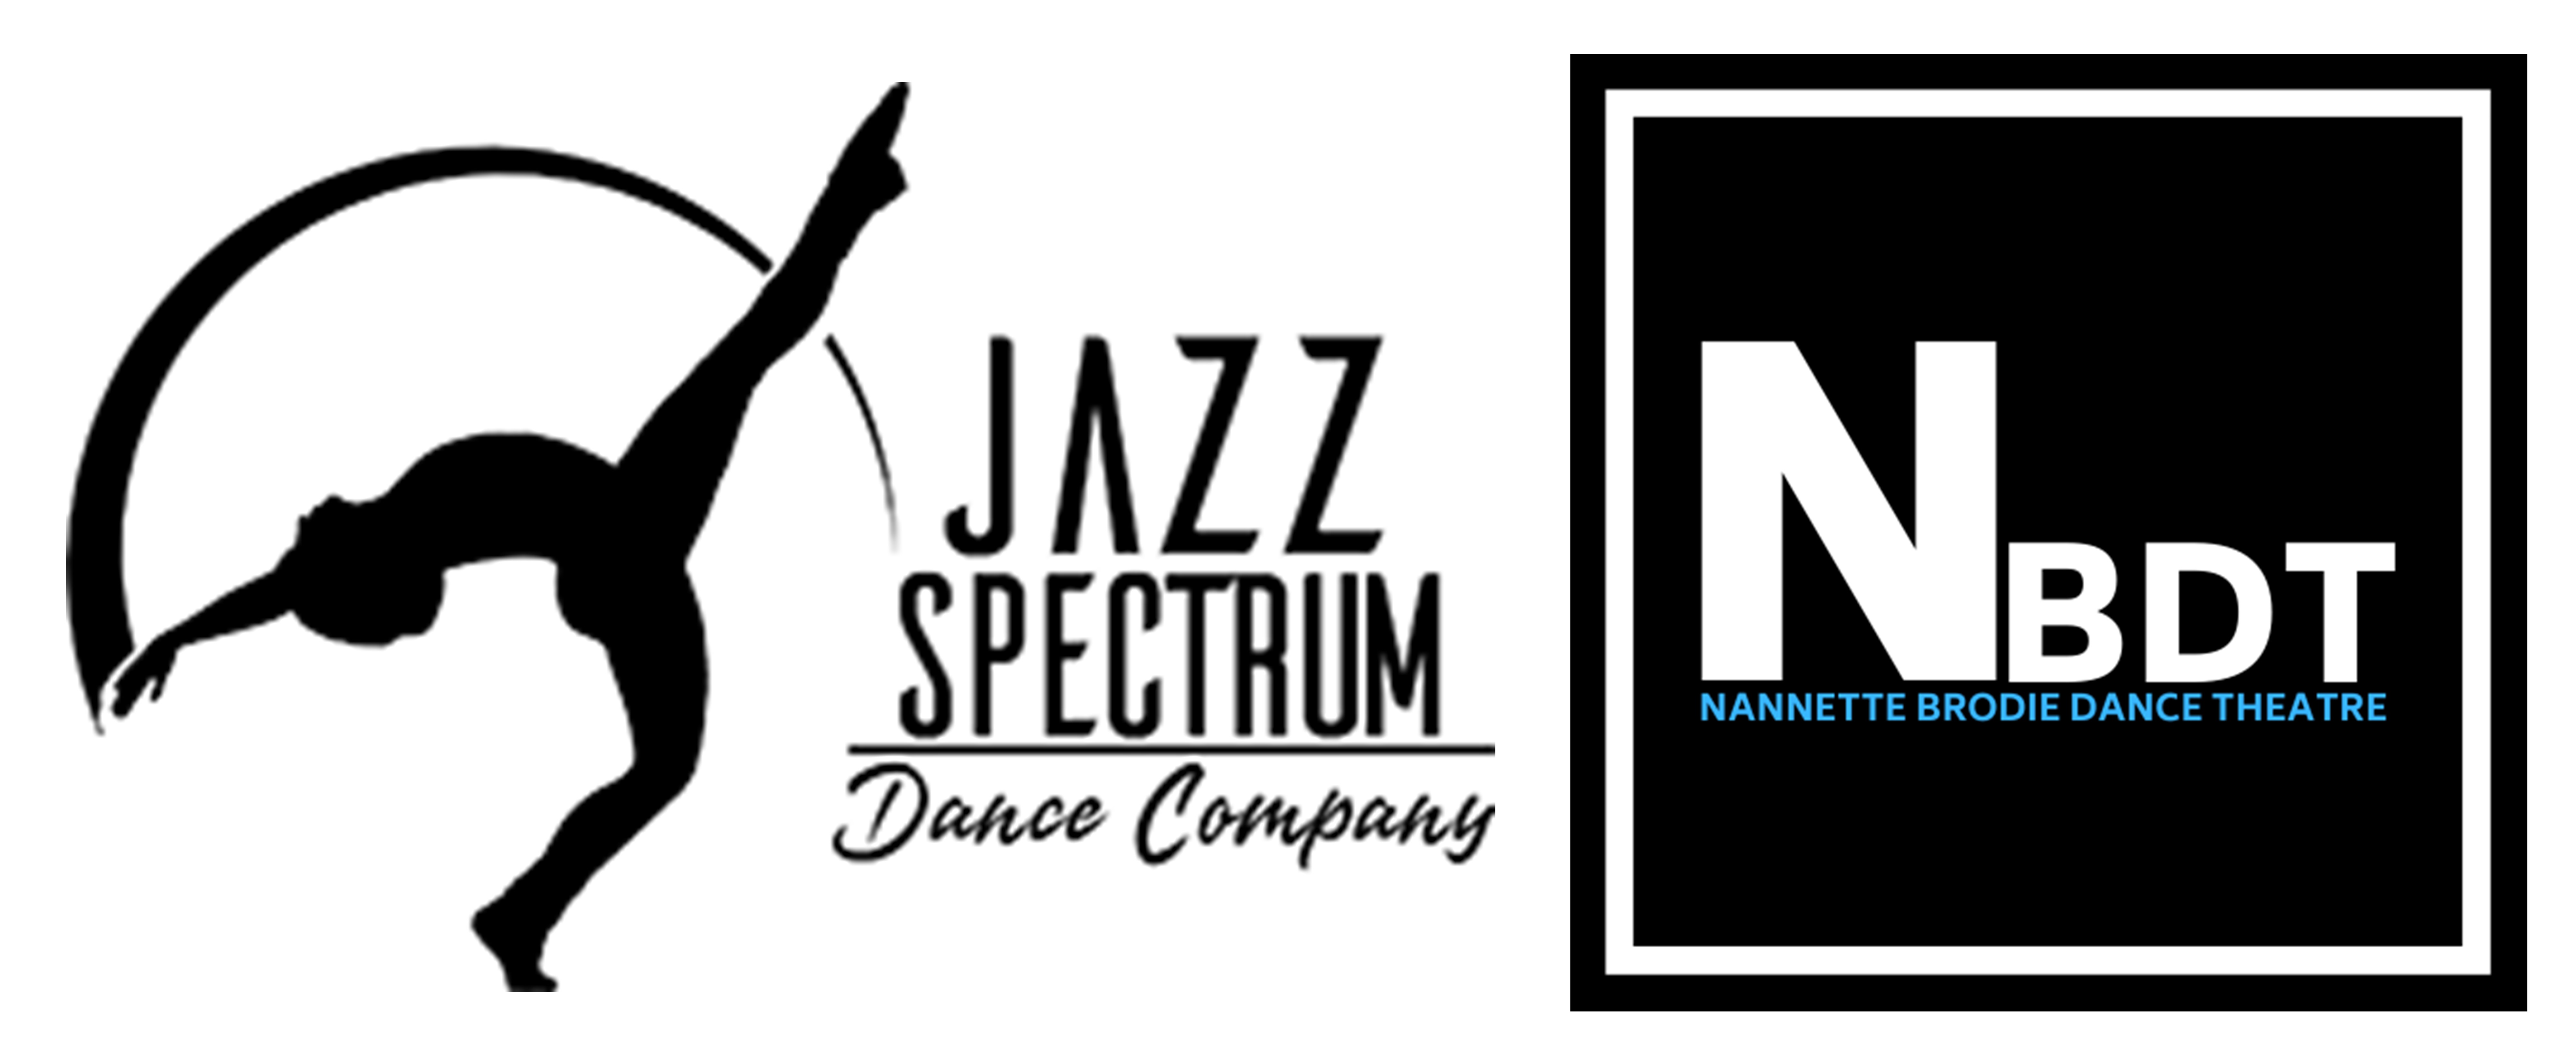 Jazz Spectrum Dance Company & Nannette Brodie Dance Theatre